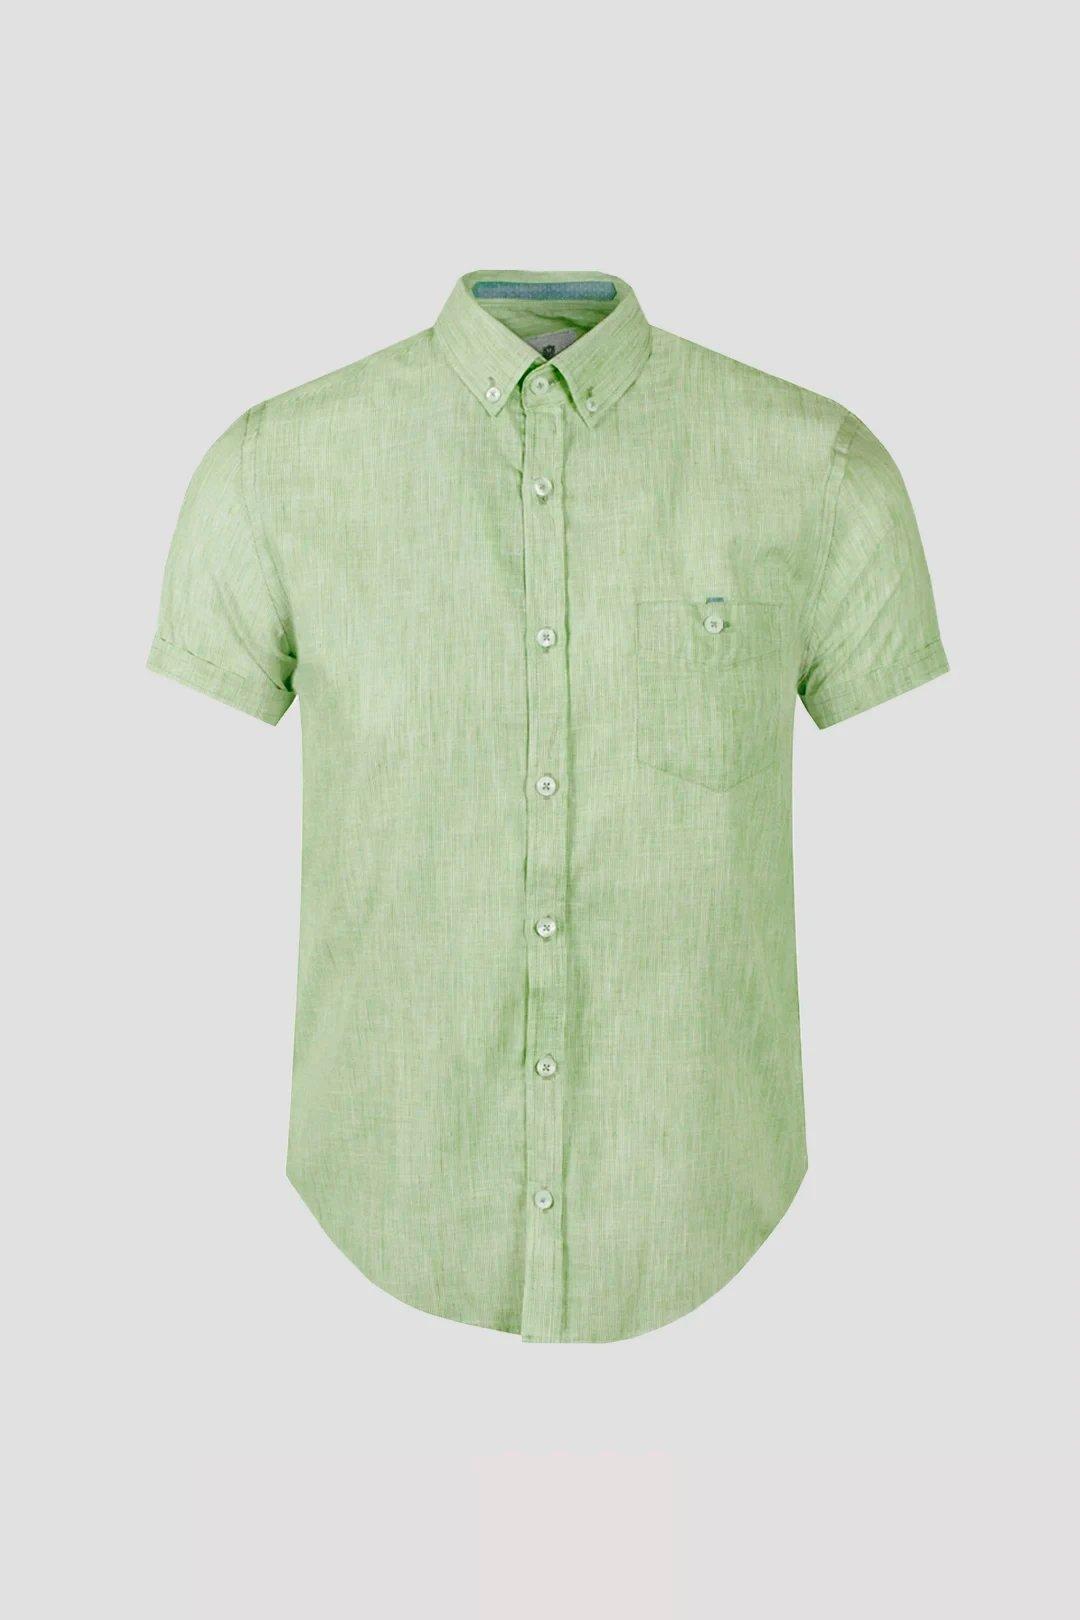 Зеленая льняная рубашка узкого кроя с коротким рукавом Steel & Jelly, зеленый